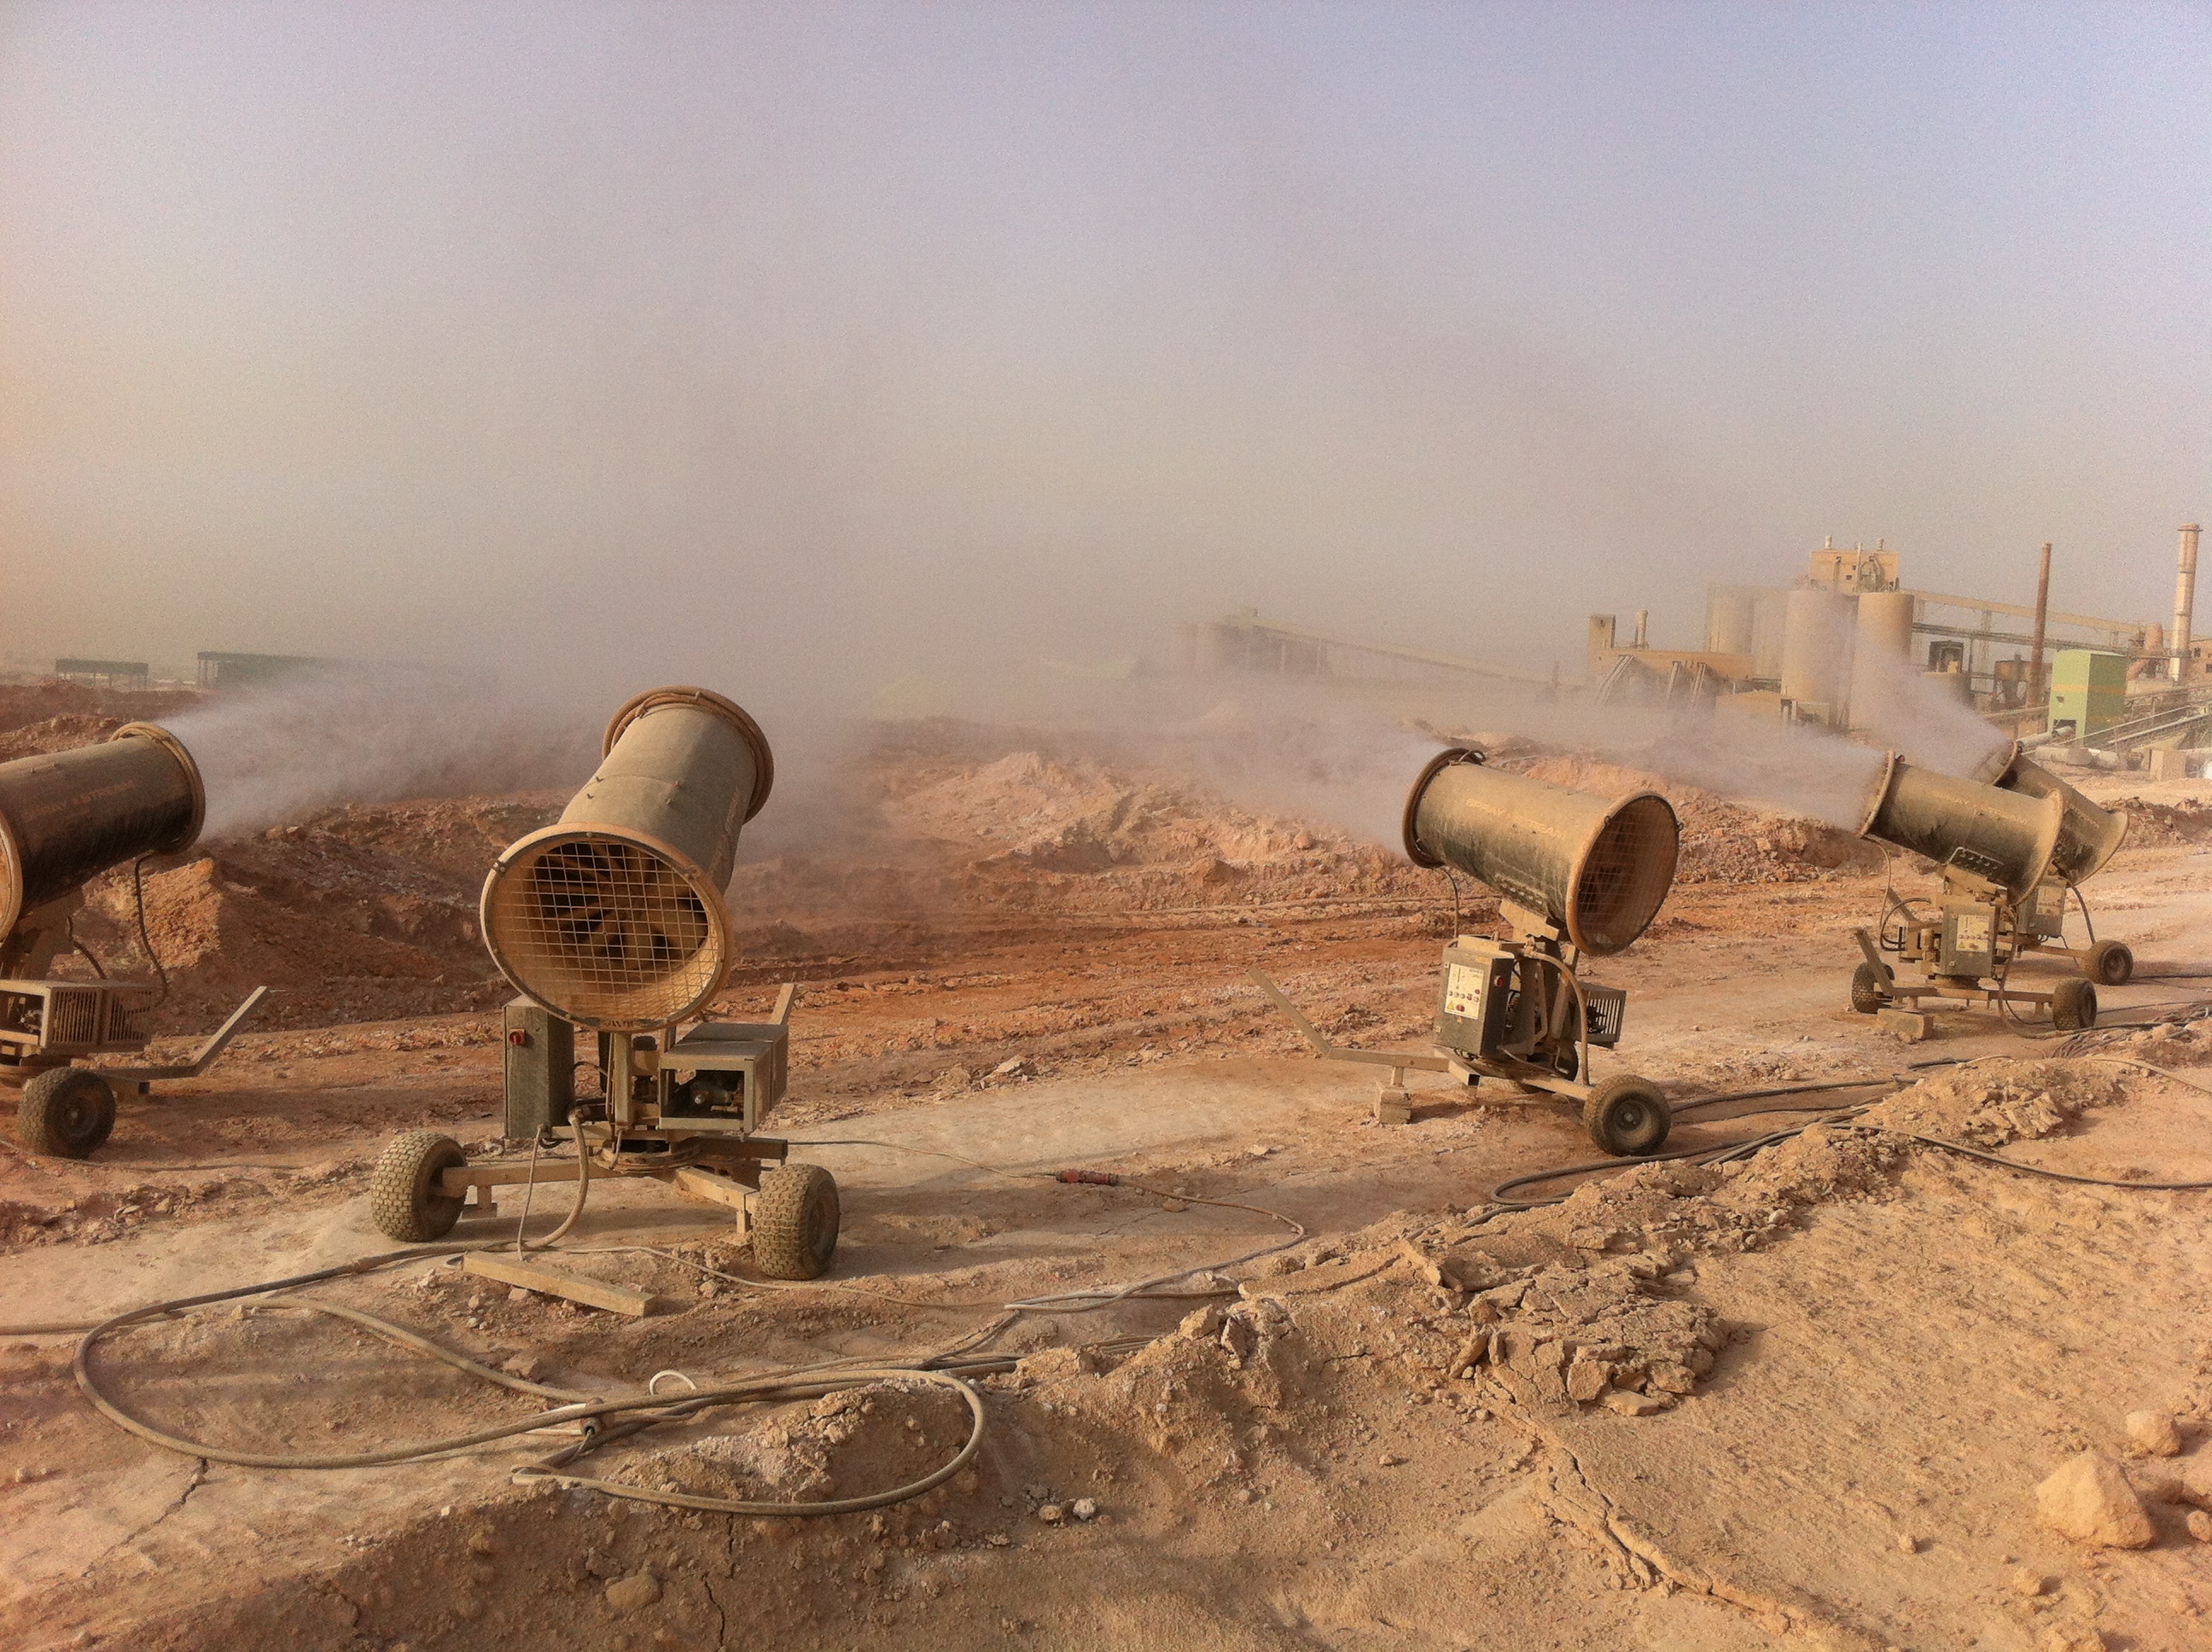 003 Saoudie Arabie mining cannon S7 5 dust 02